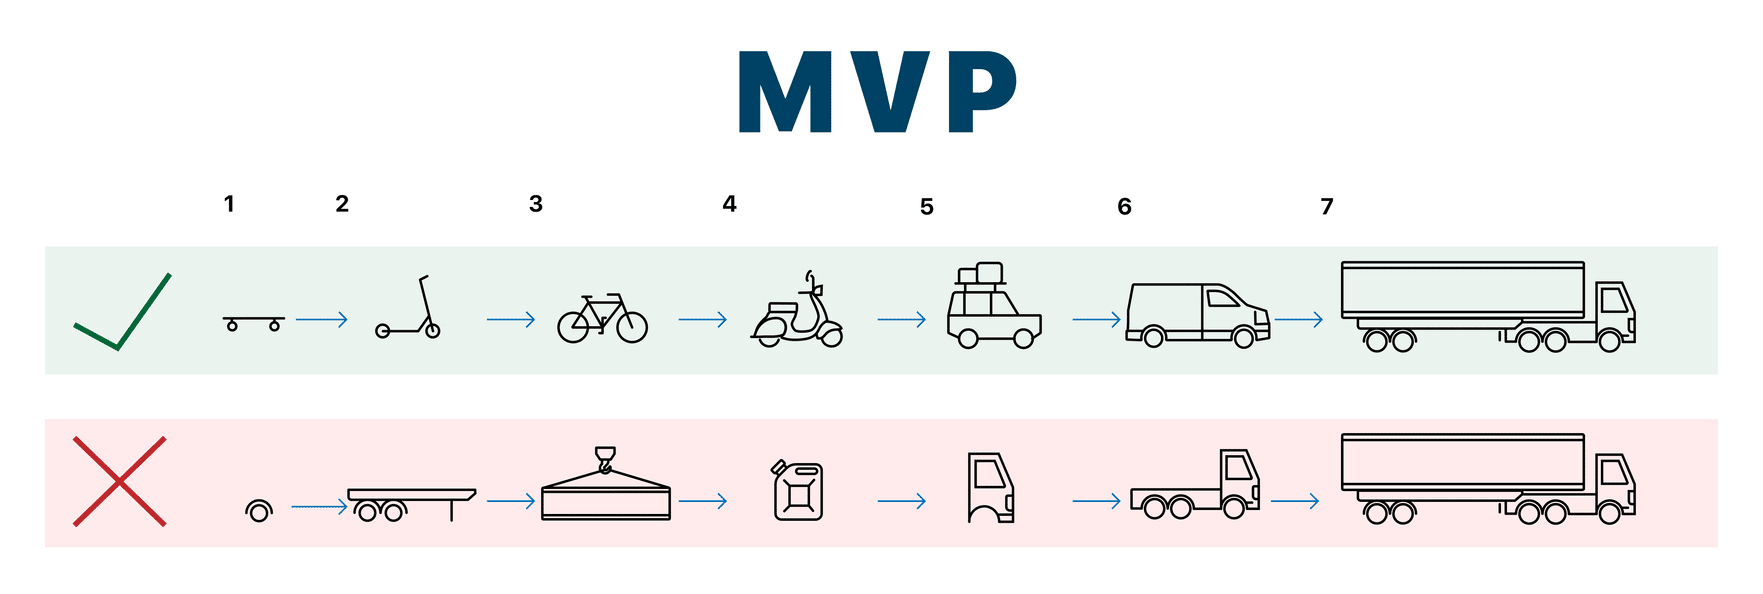 mvp vs prototype